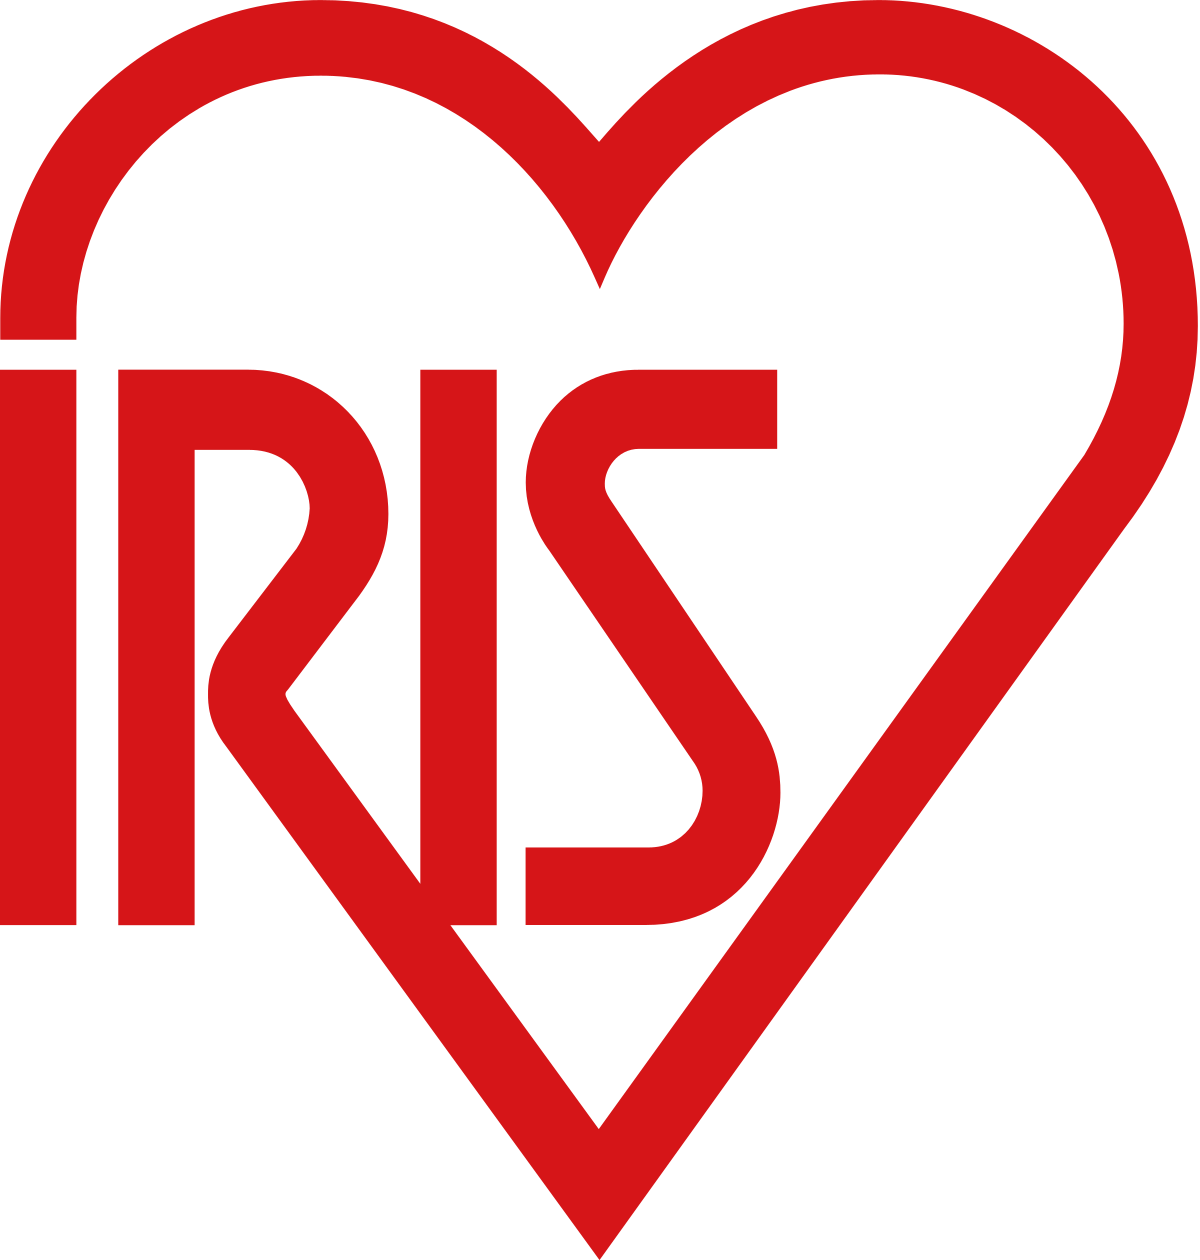 Free Download IRIS OHYAMA Inc. Logo Vector from